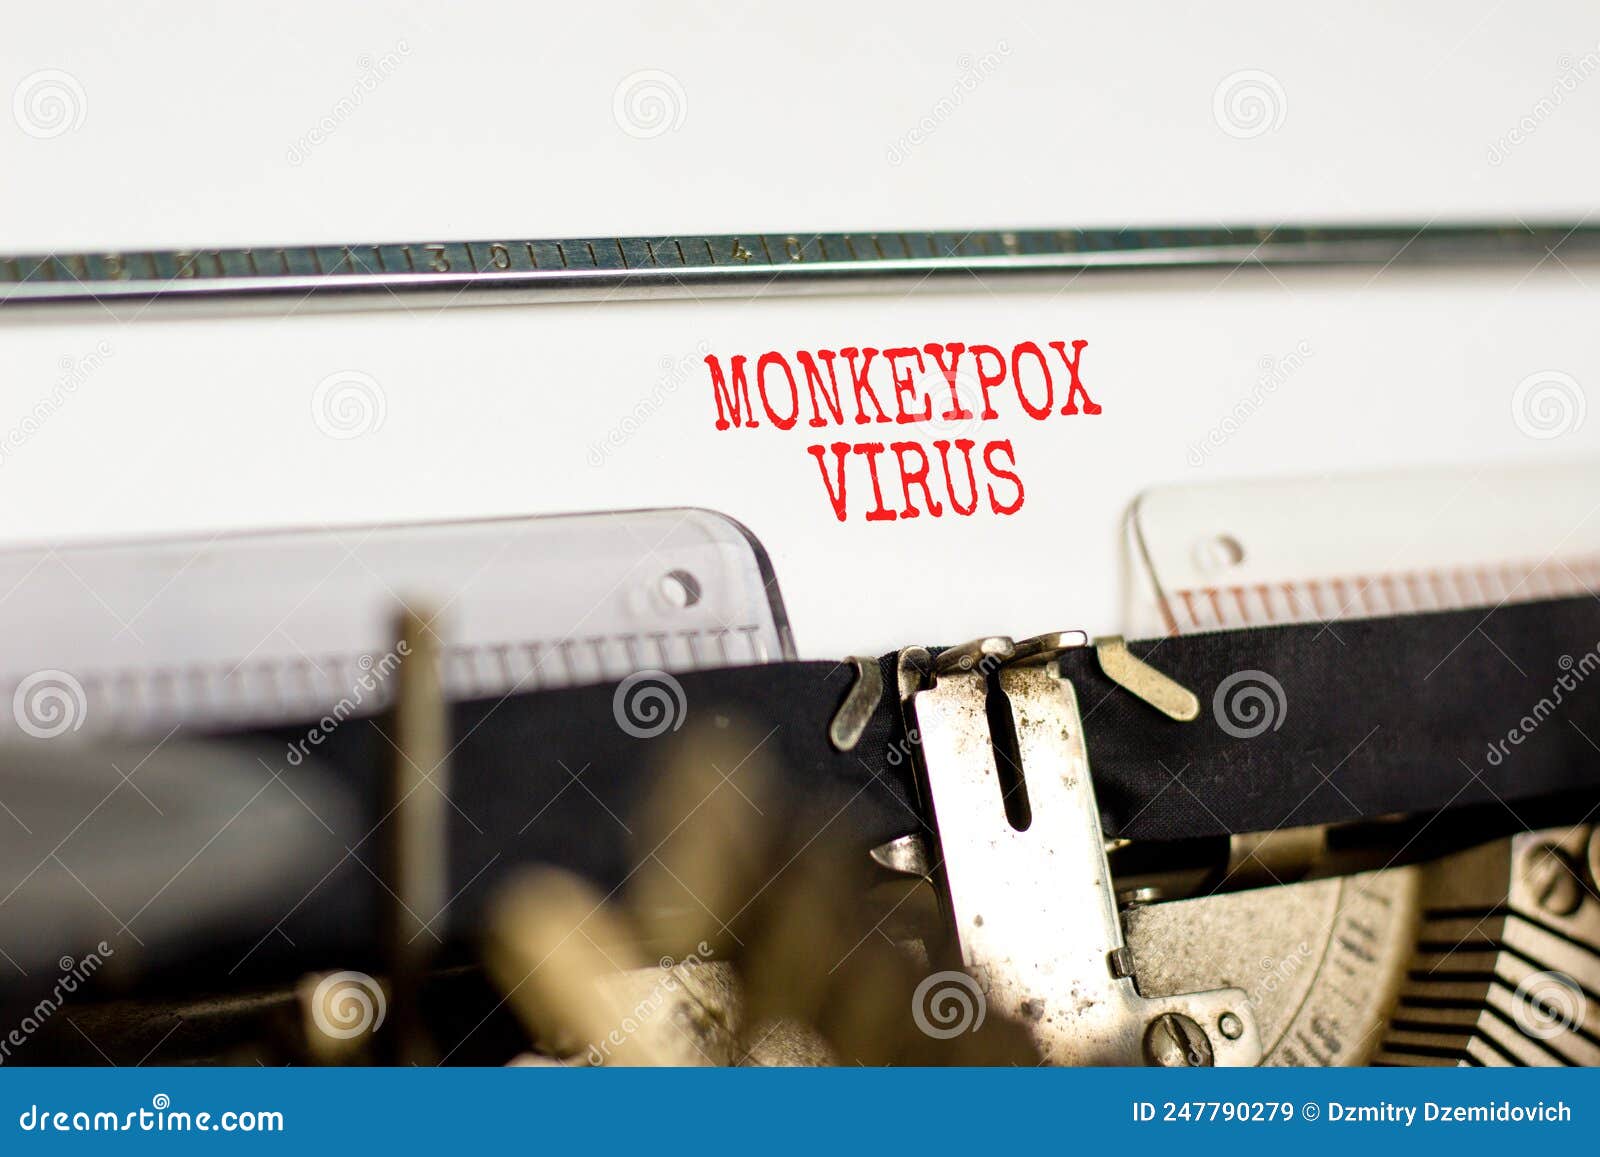 monkeypox virus . concept words monkeypox virus typed on retro typewriter. medical and monkeypox virus concept. copy space.